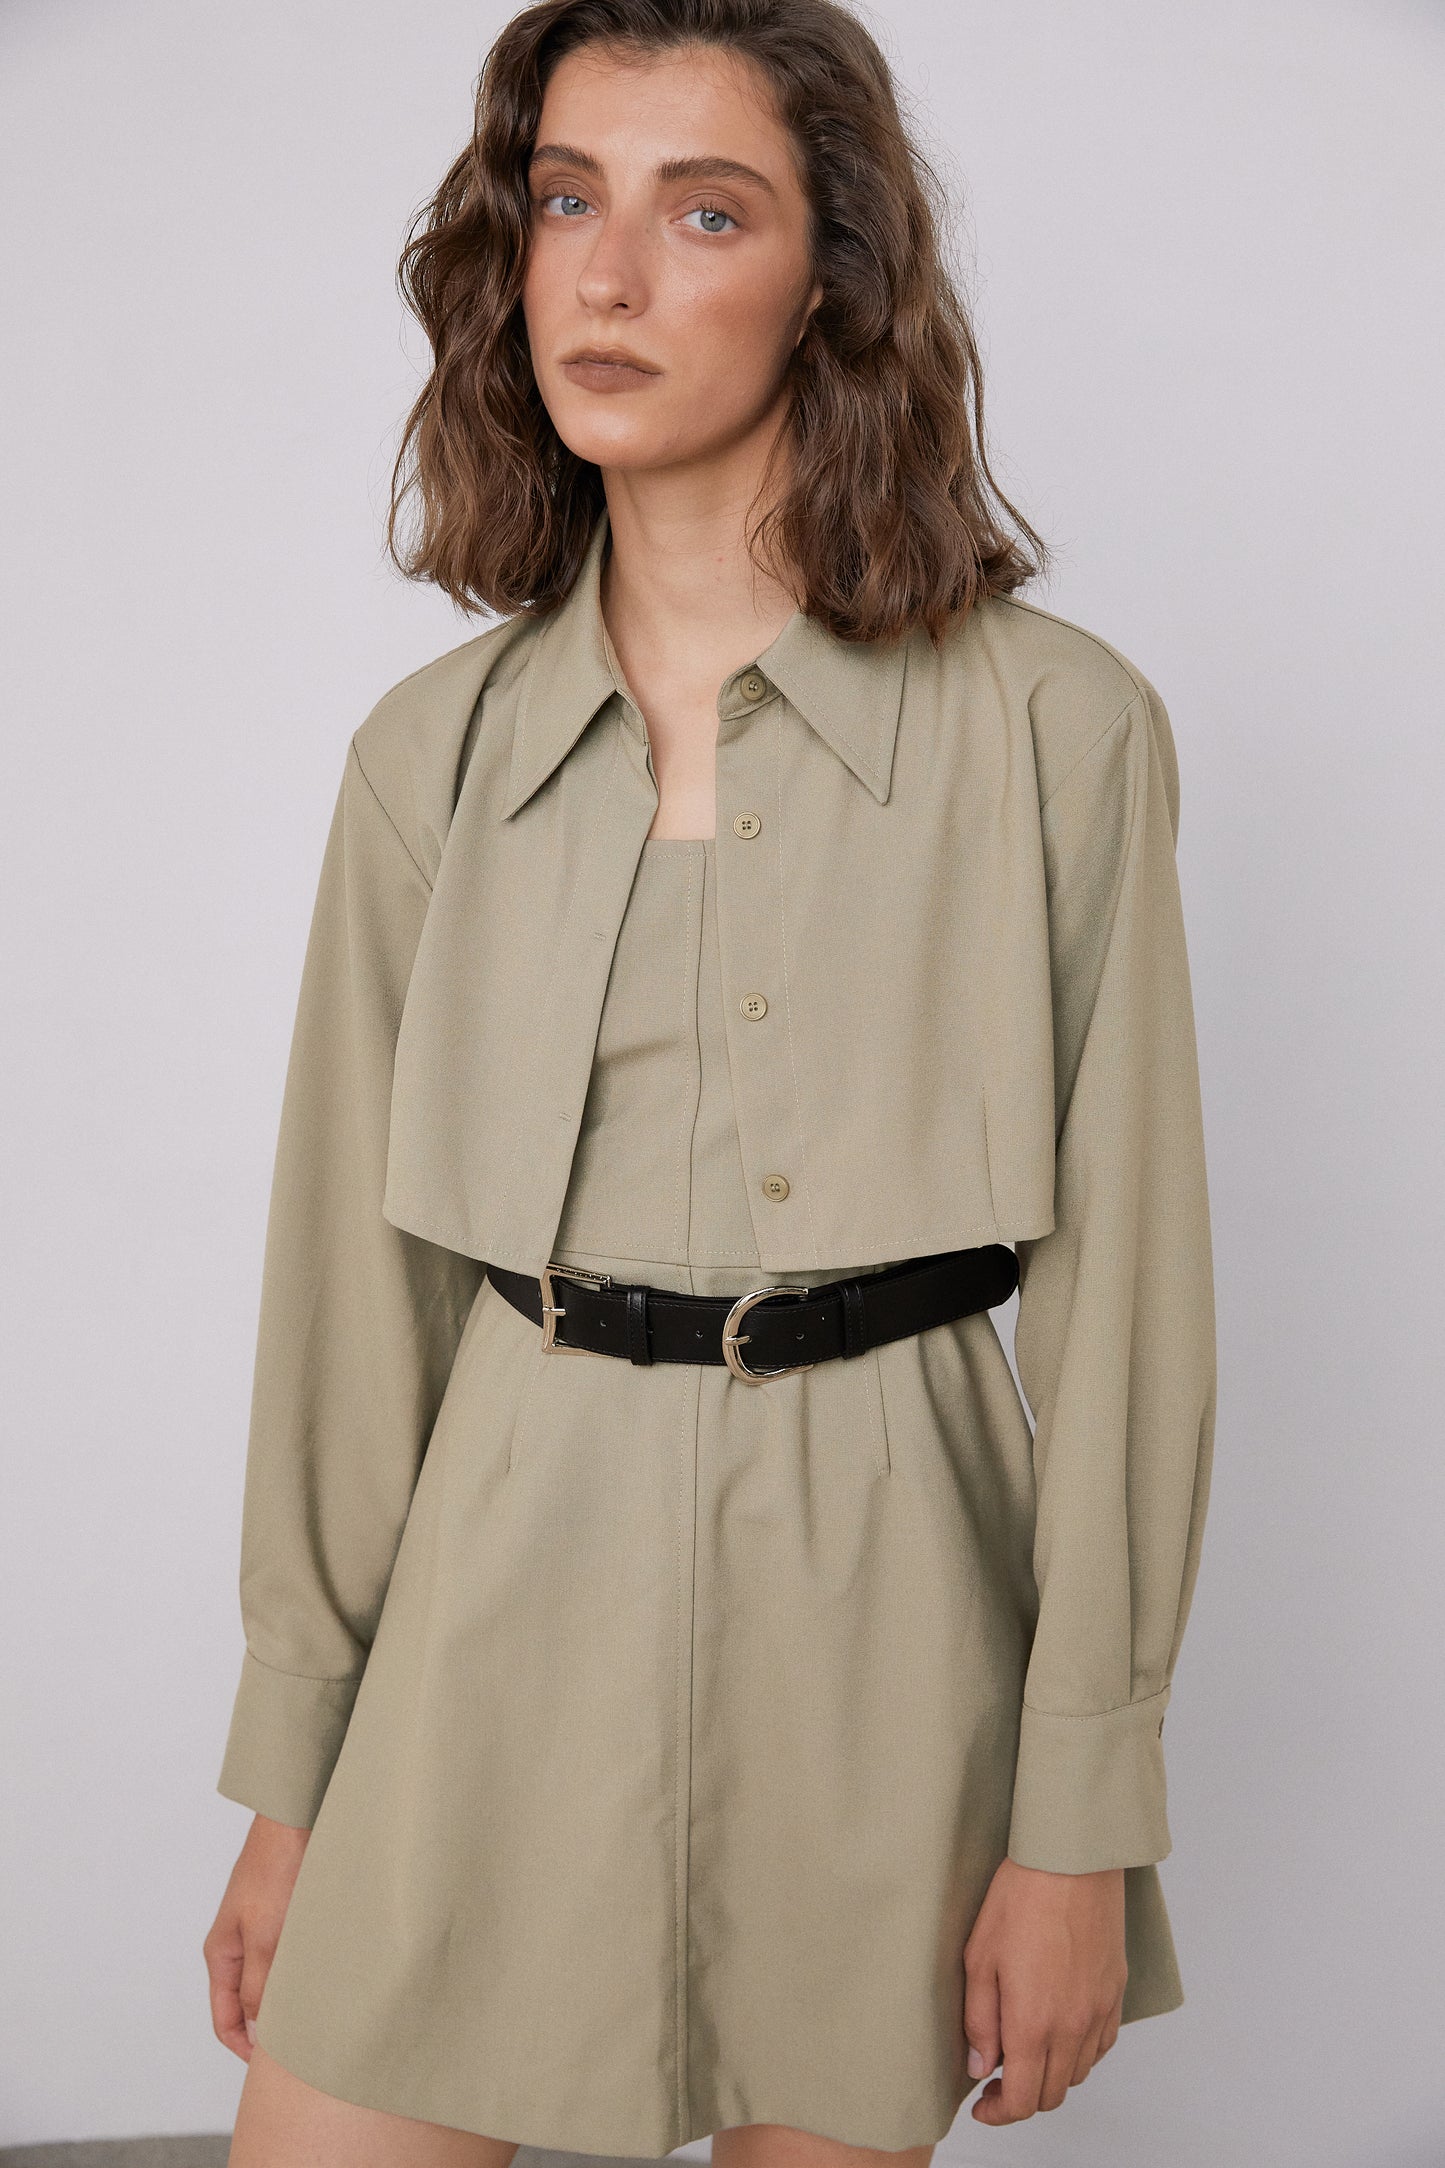 Cropped Button Up Shirt, Olive Khaki